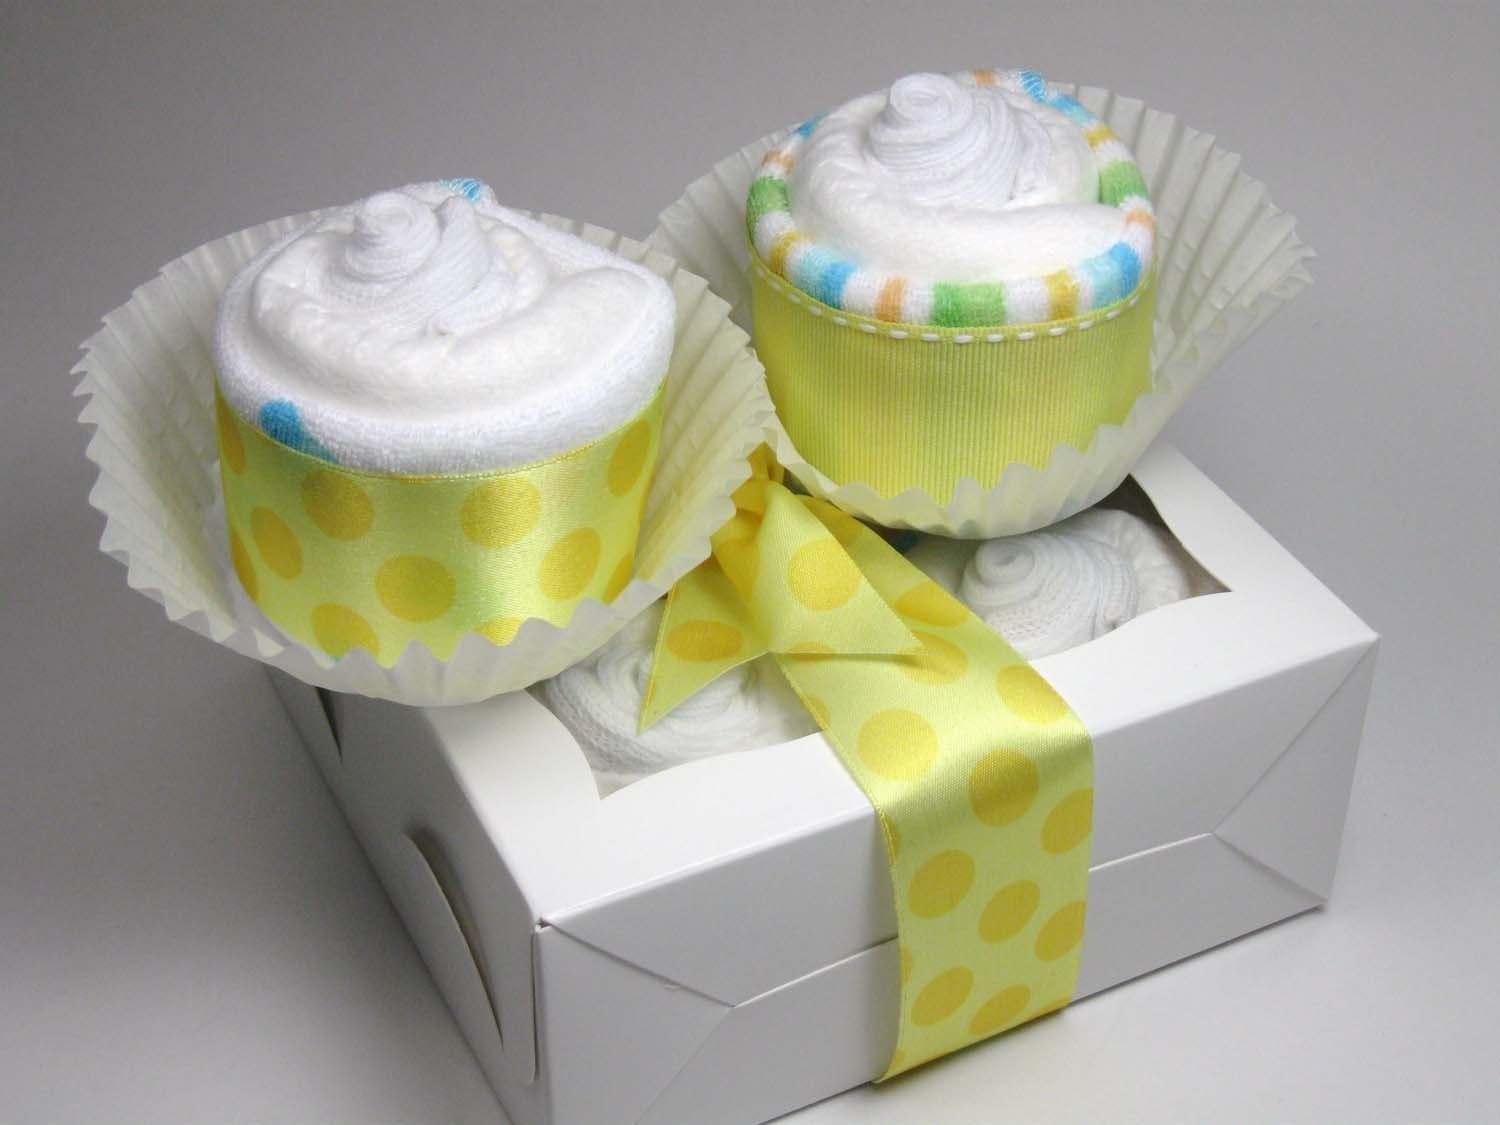 FREE Washcloth Lollipop...SWEET
Diaper Cupcake Set